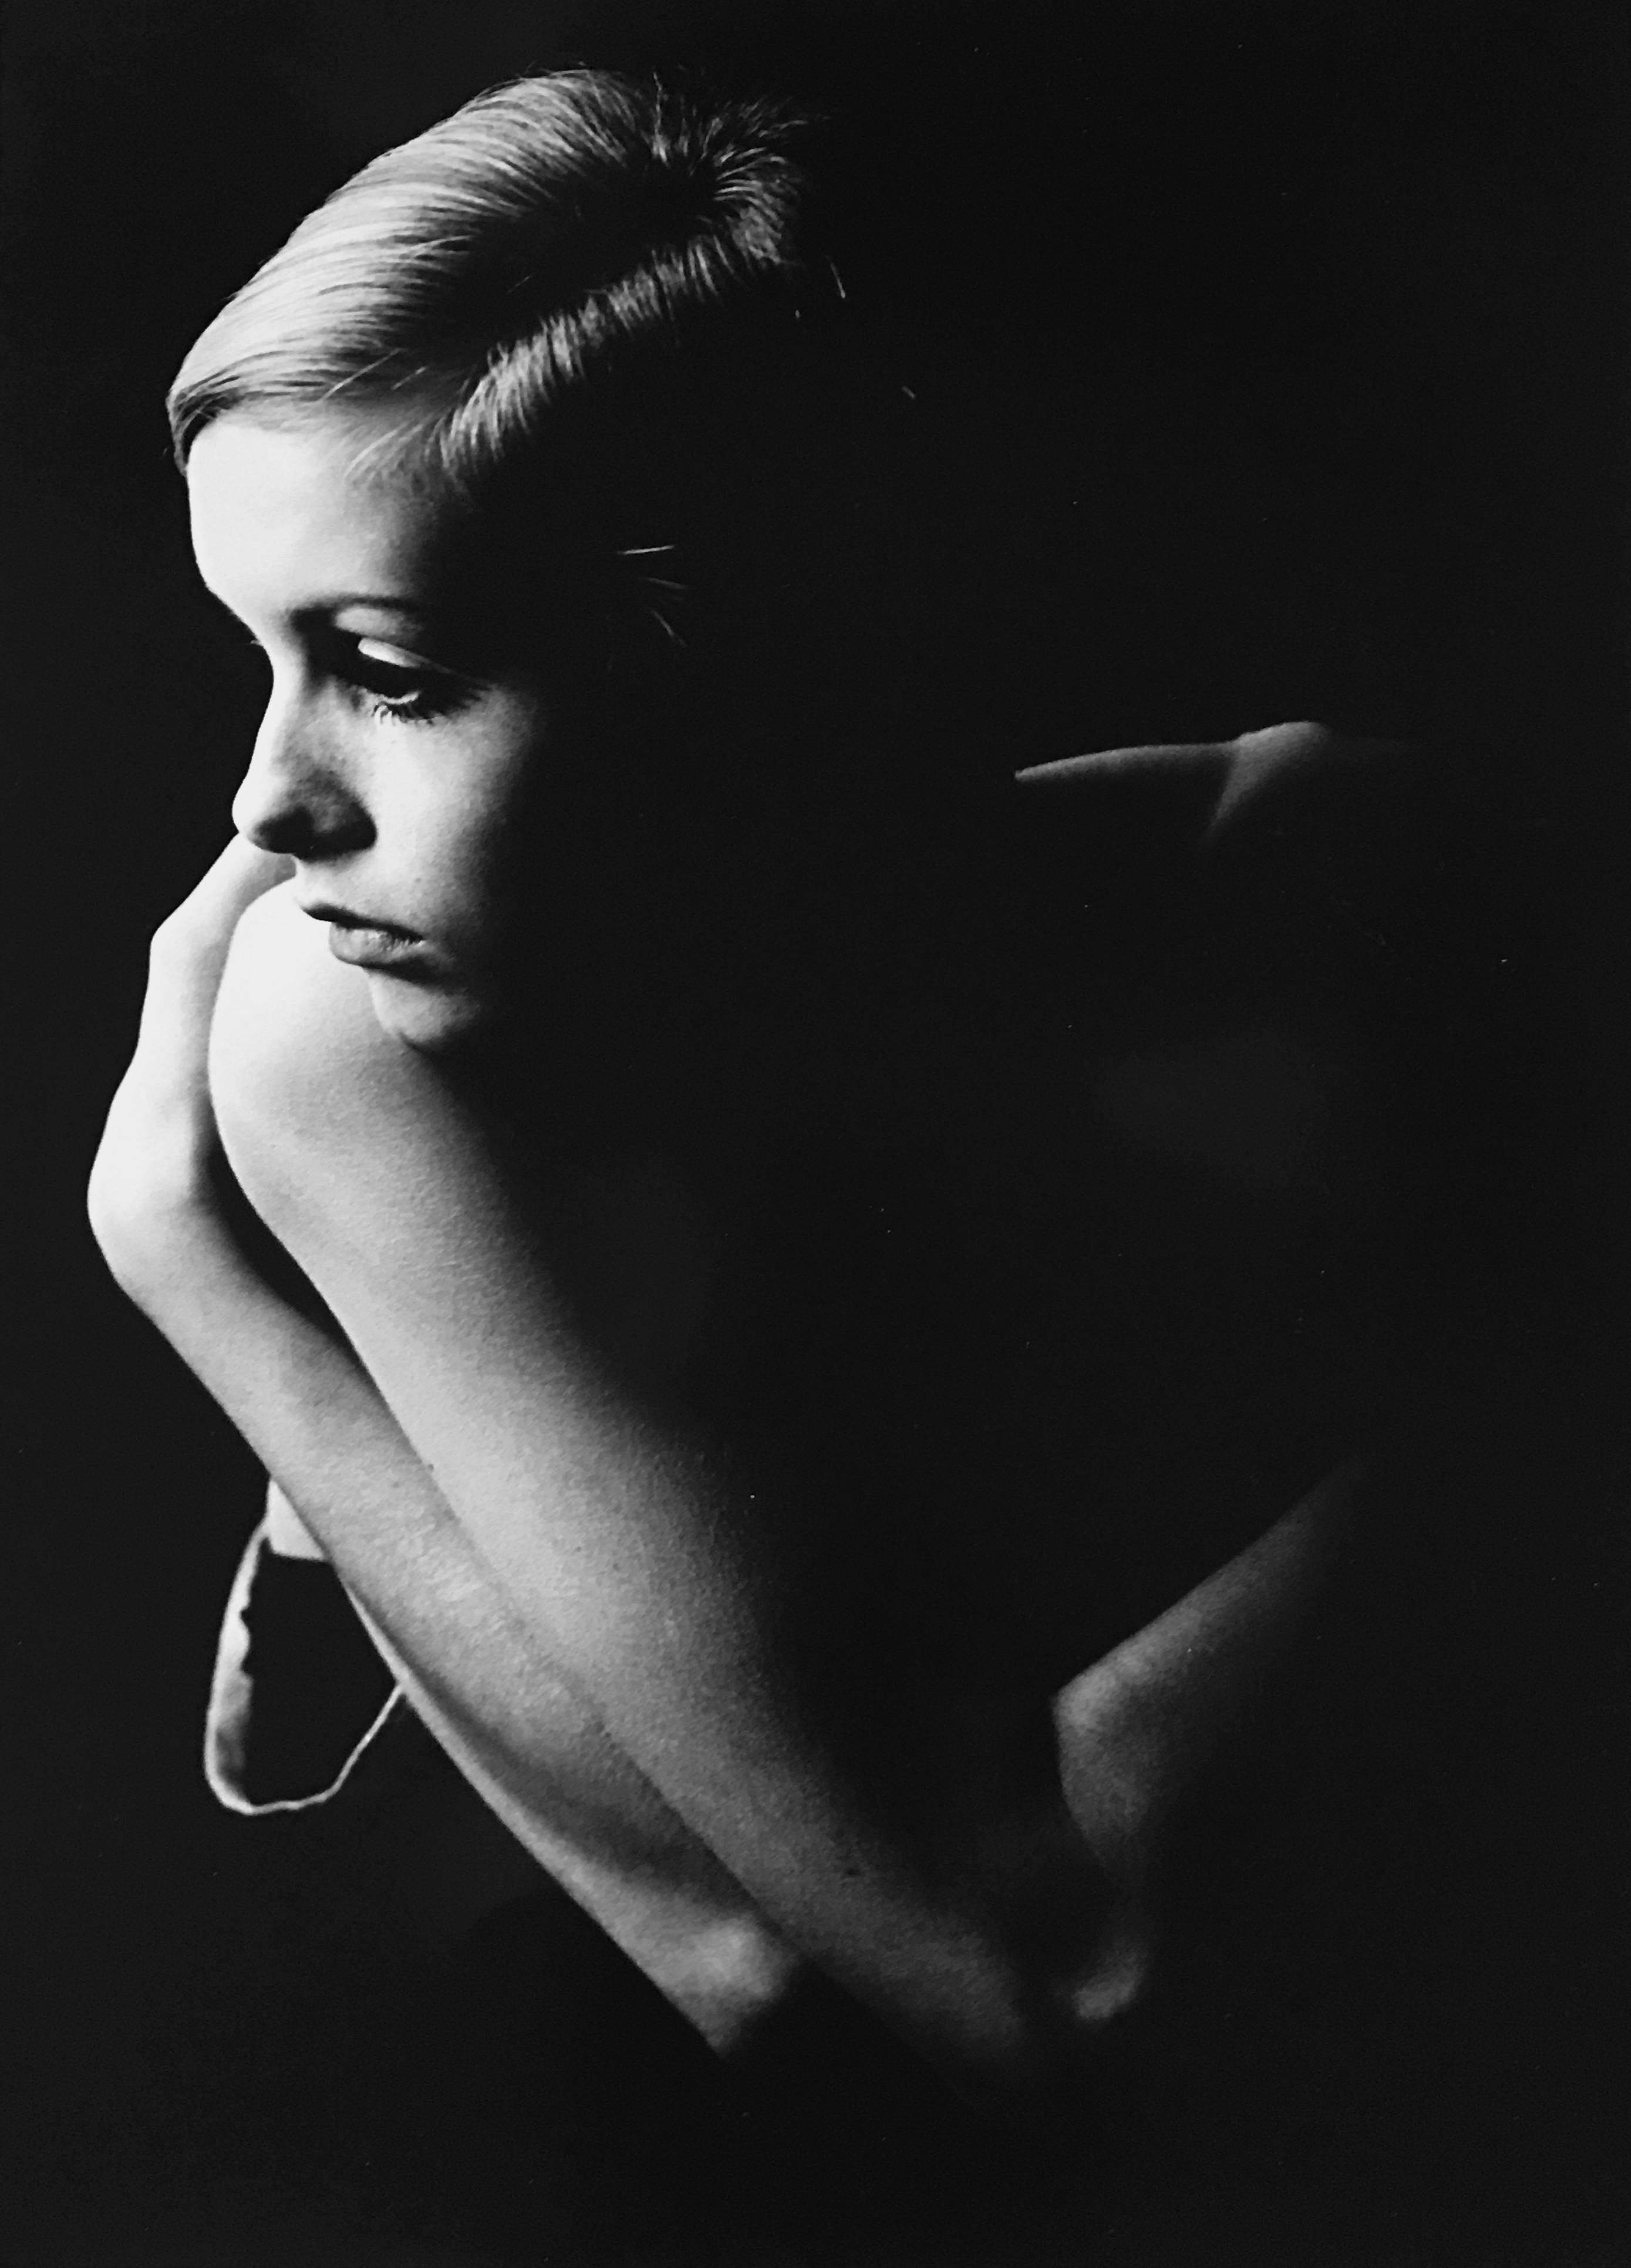 Burt Glinn Black and White Photograph - Twiggy, London, Black and White Portrait Photography of 1960s British Top Model 